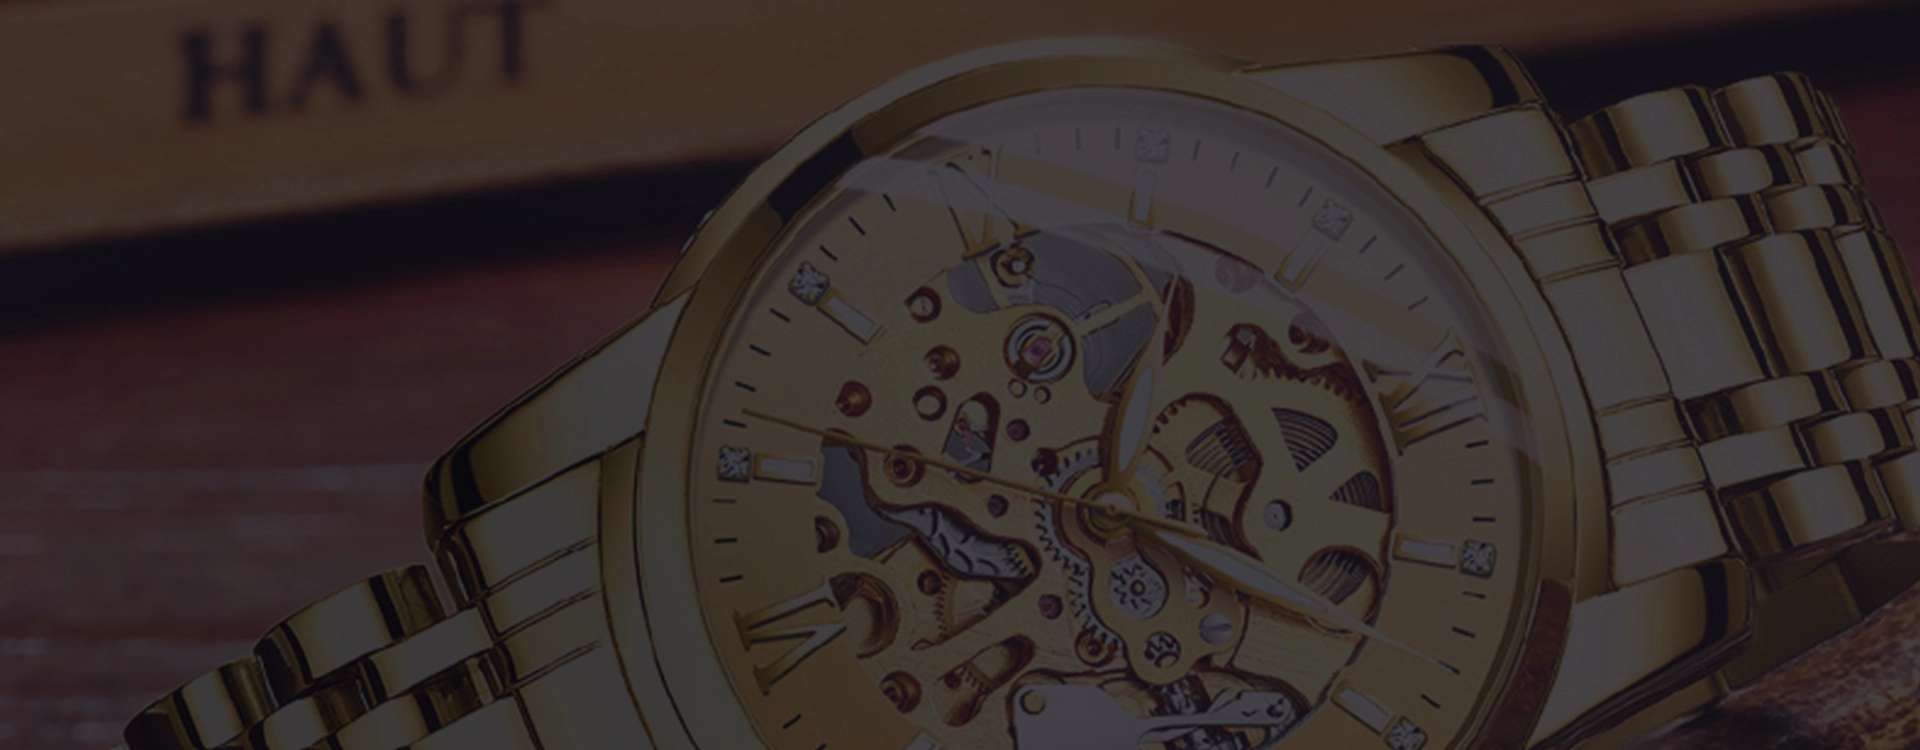 The Art of Mechanical Watch Making